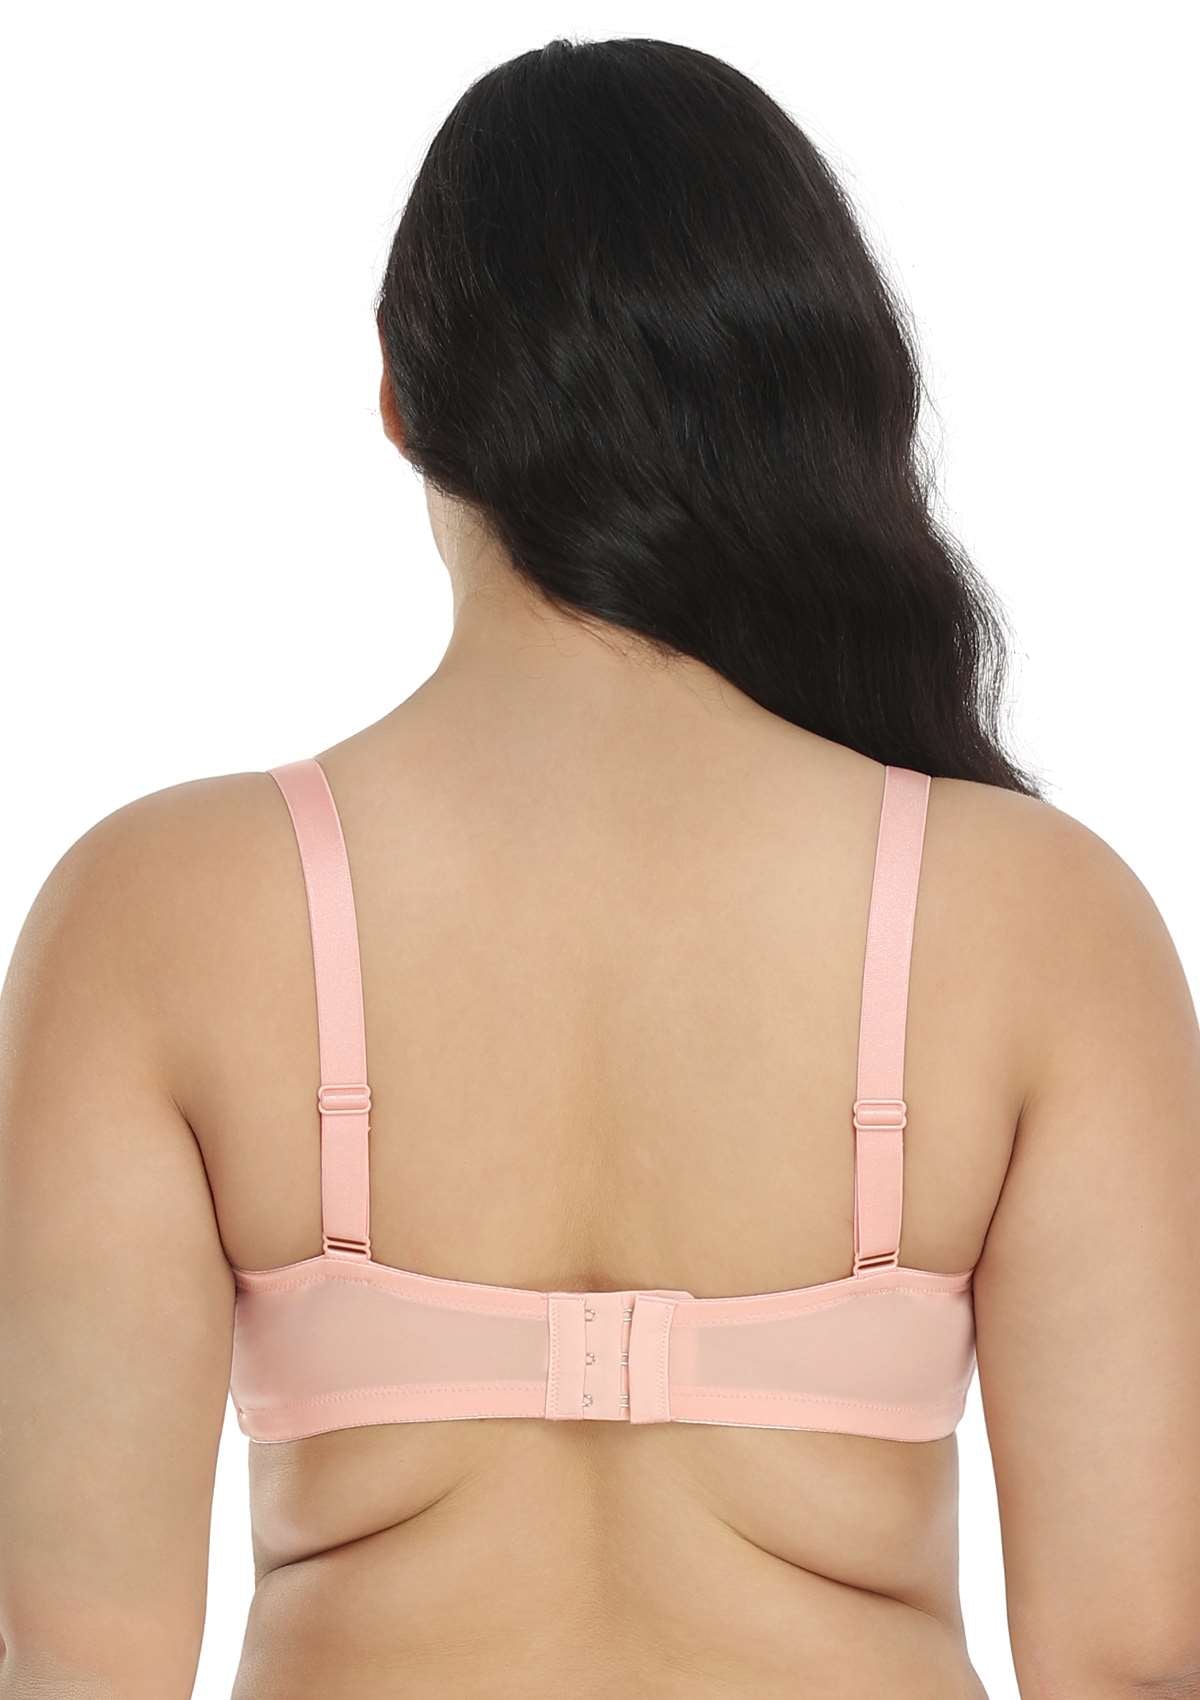 HSIA Rosa Bonica Sheer Lace Mesh Unlined Thin Comfy Woman Bra - Pink / 38 / DD/E